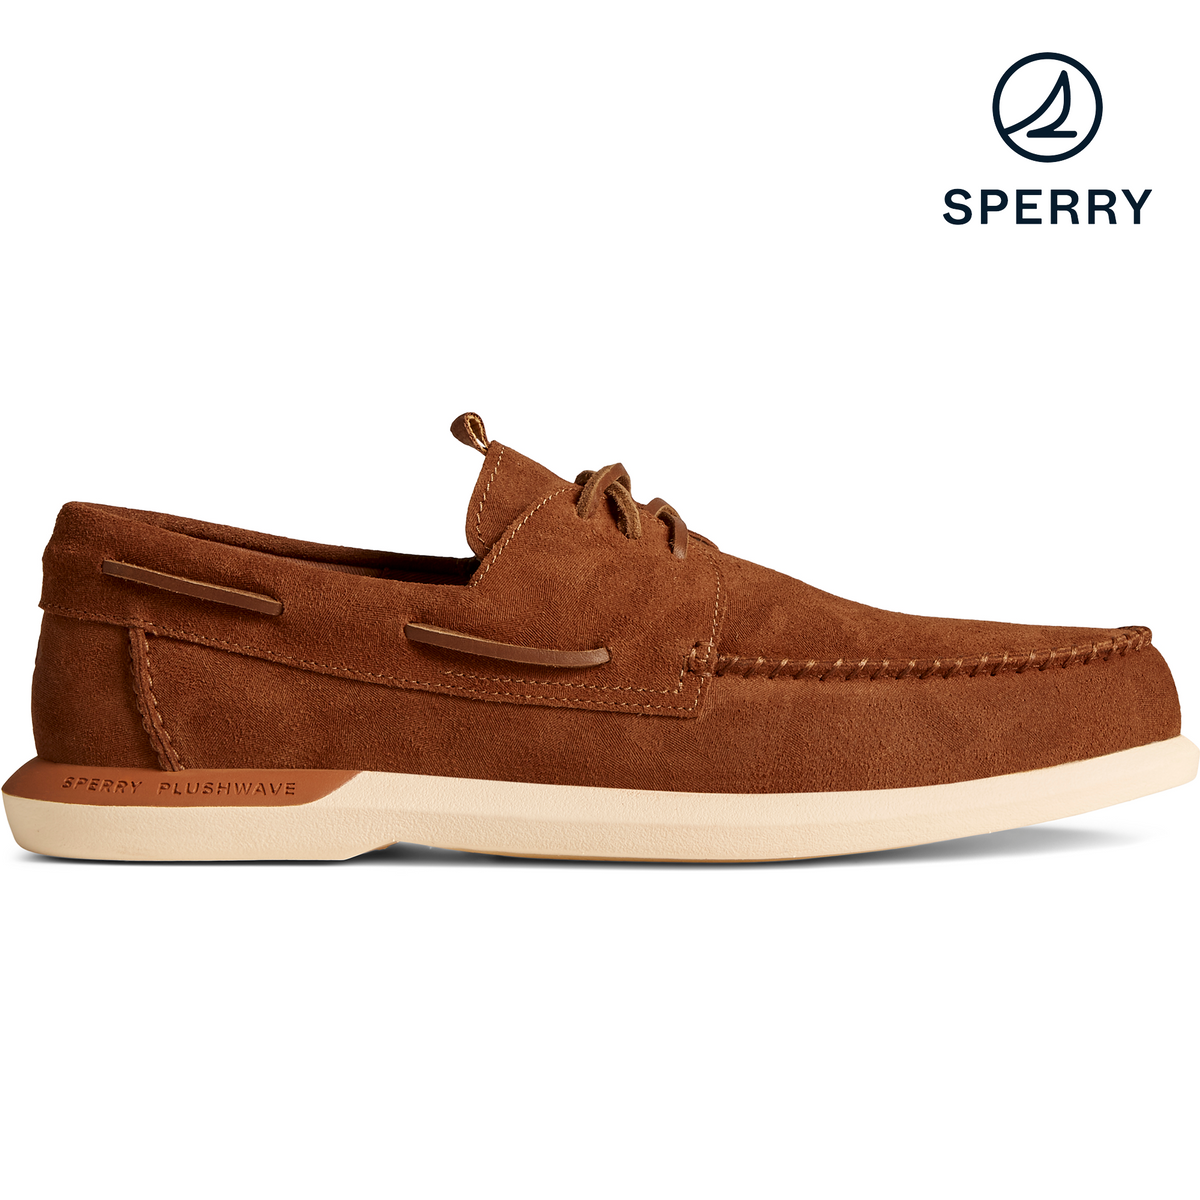 Sperry Authentic Original Boat Shoe Plushwave – Creha Honduras